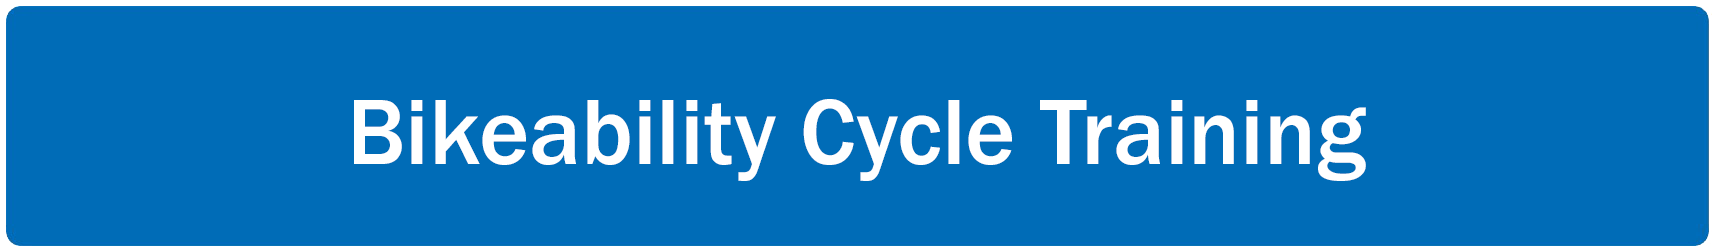 Bikeability Cycle Training